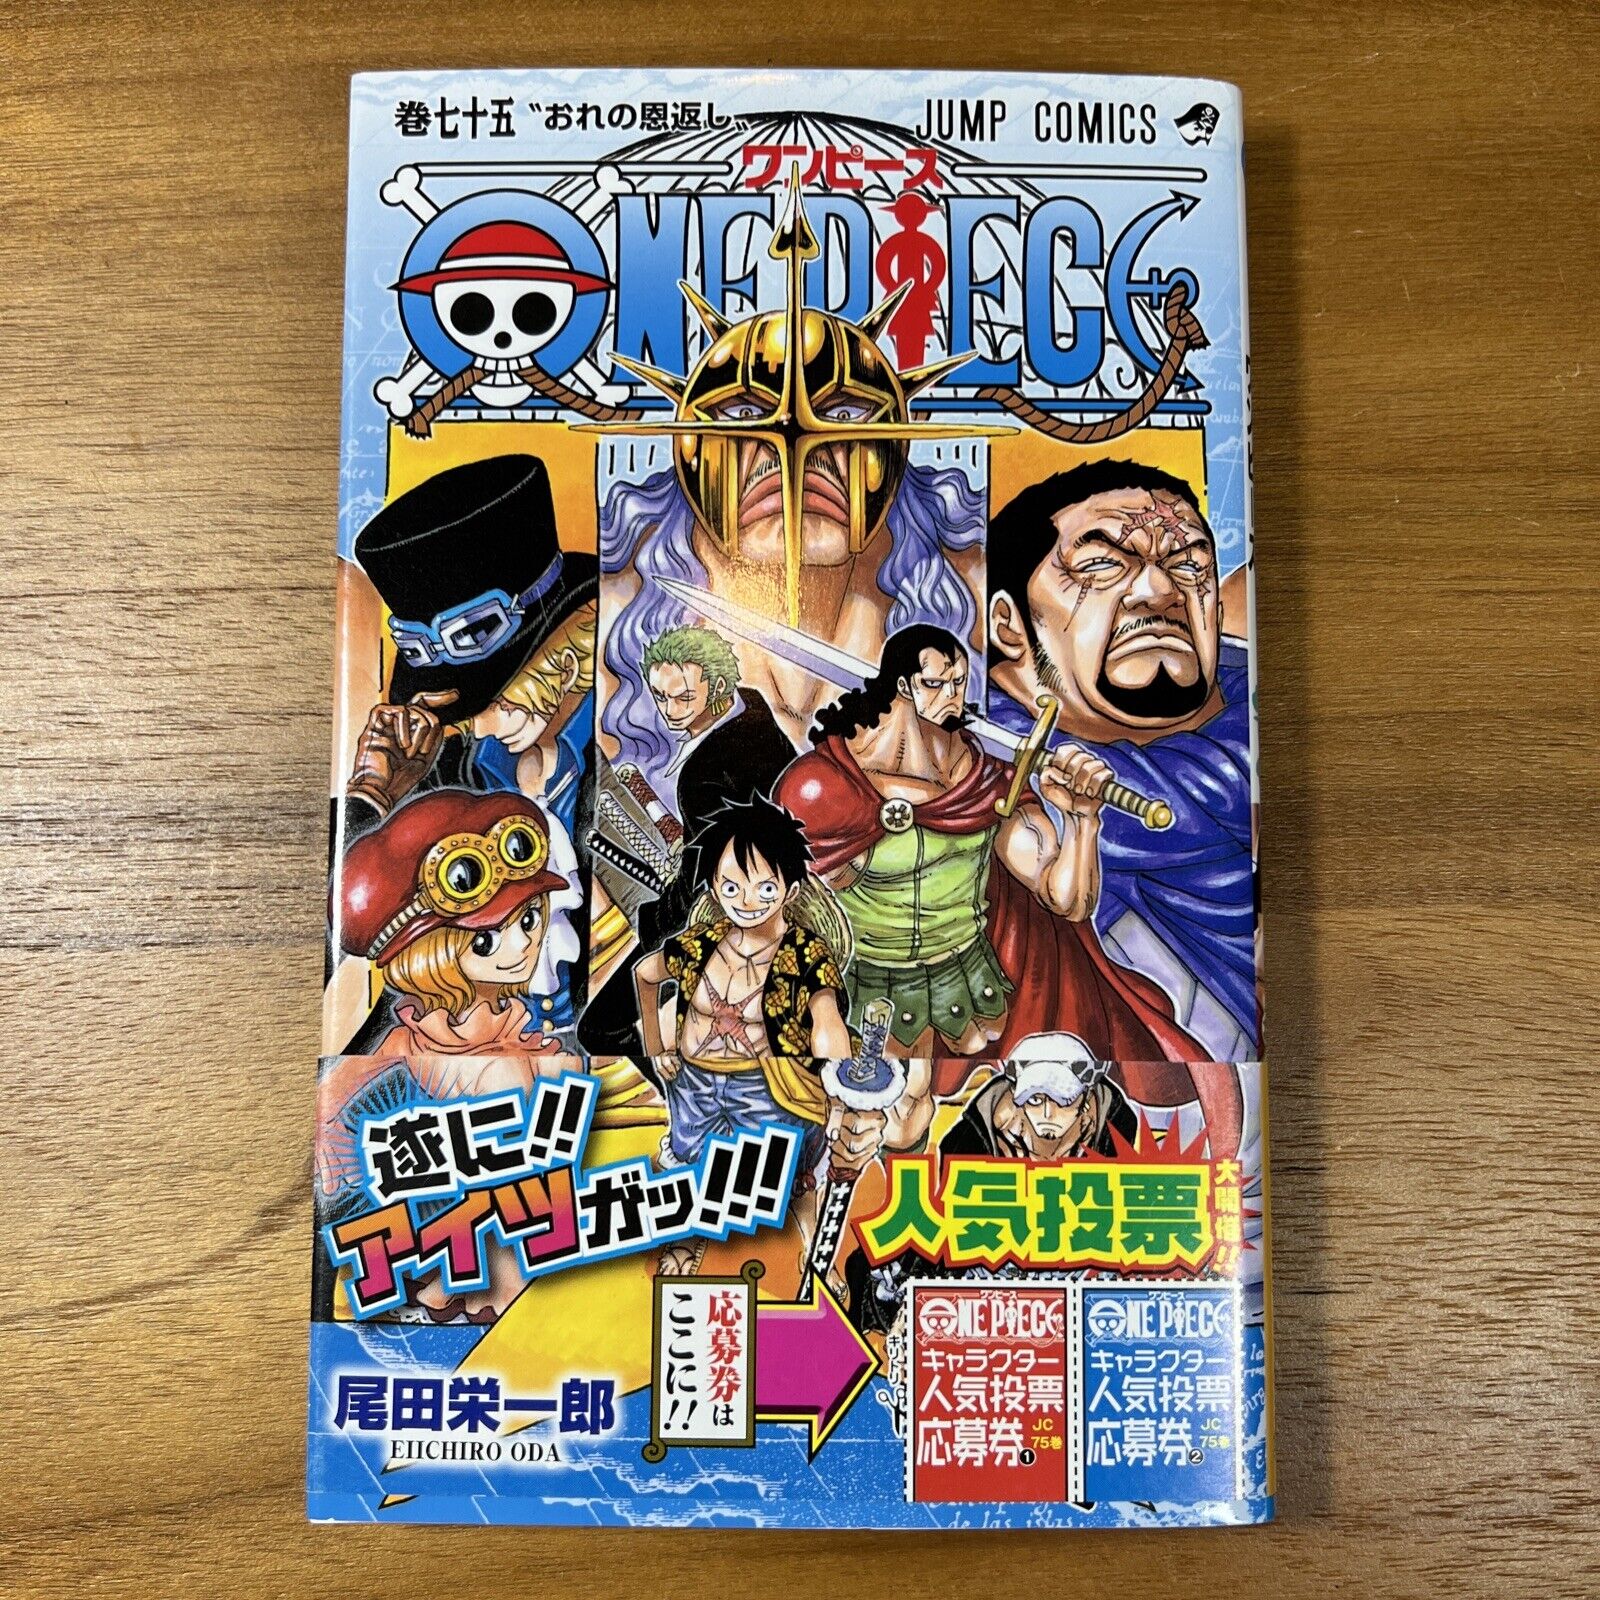 1st Printing obi One Piece VOL 75 Japanese Manga Book Jump Comics Eiichiro Oda